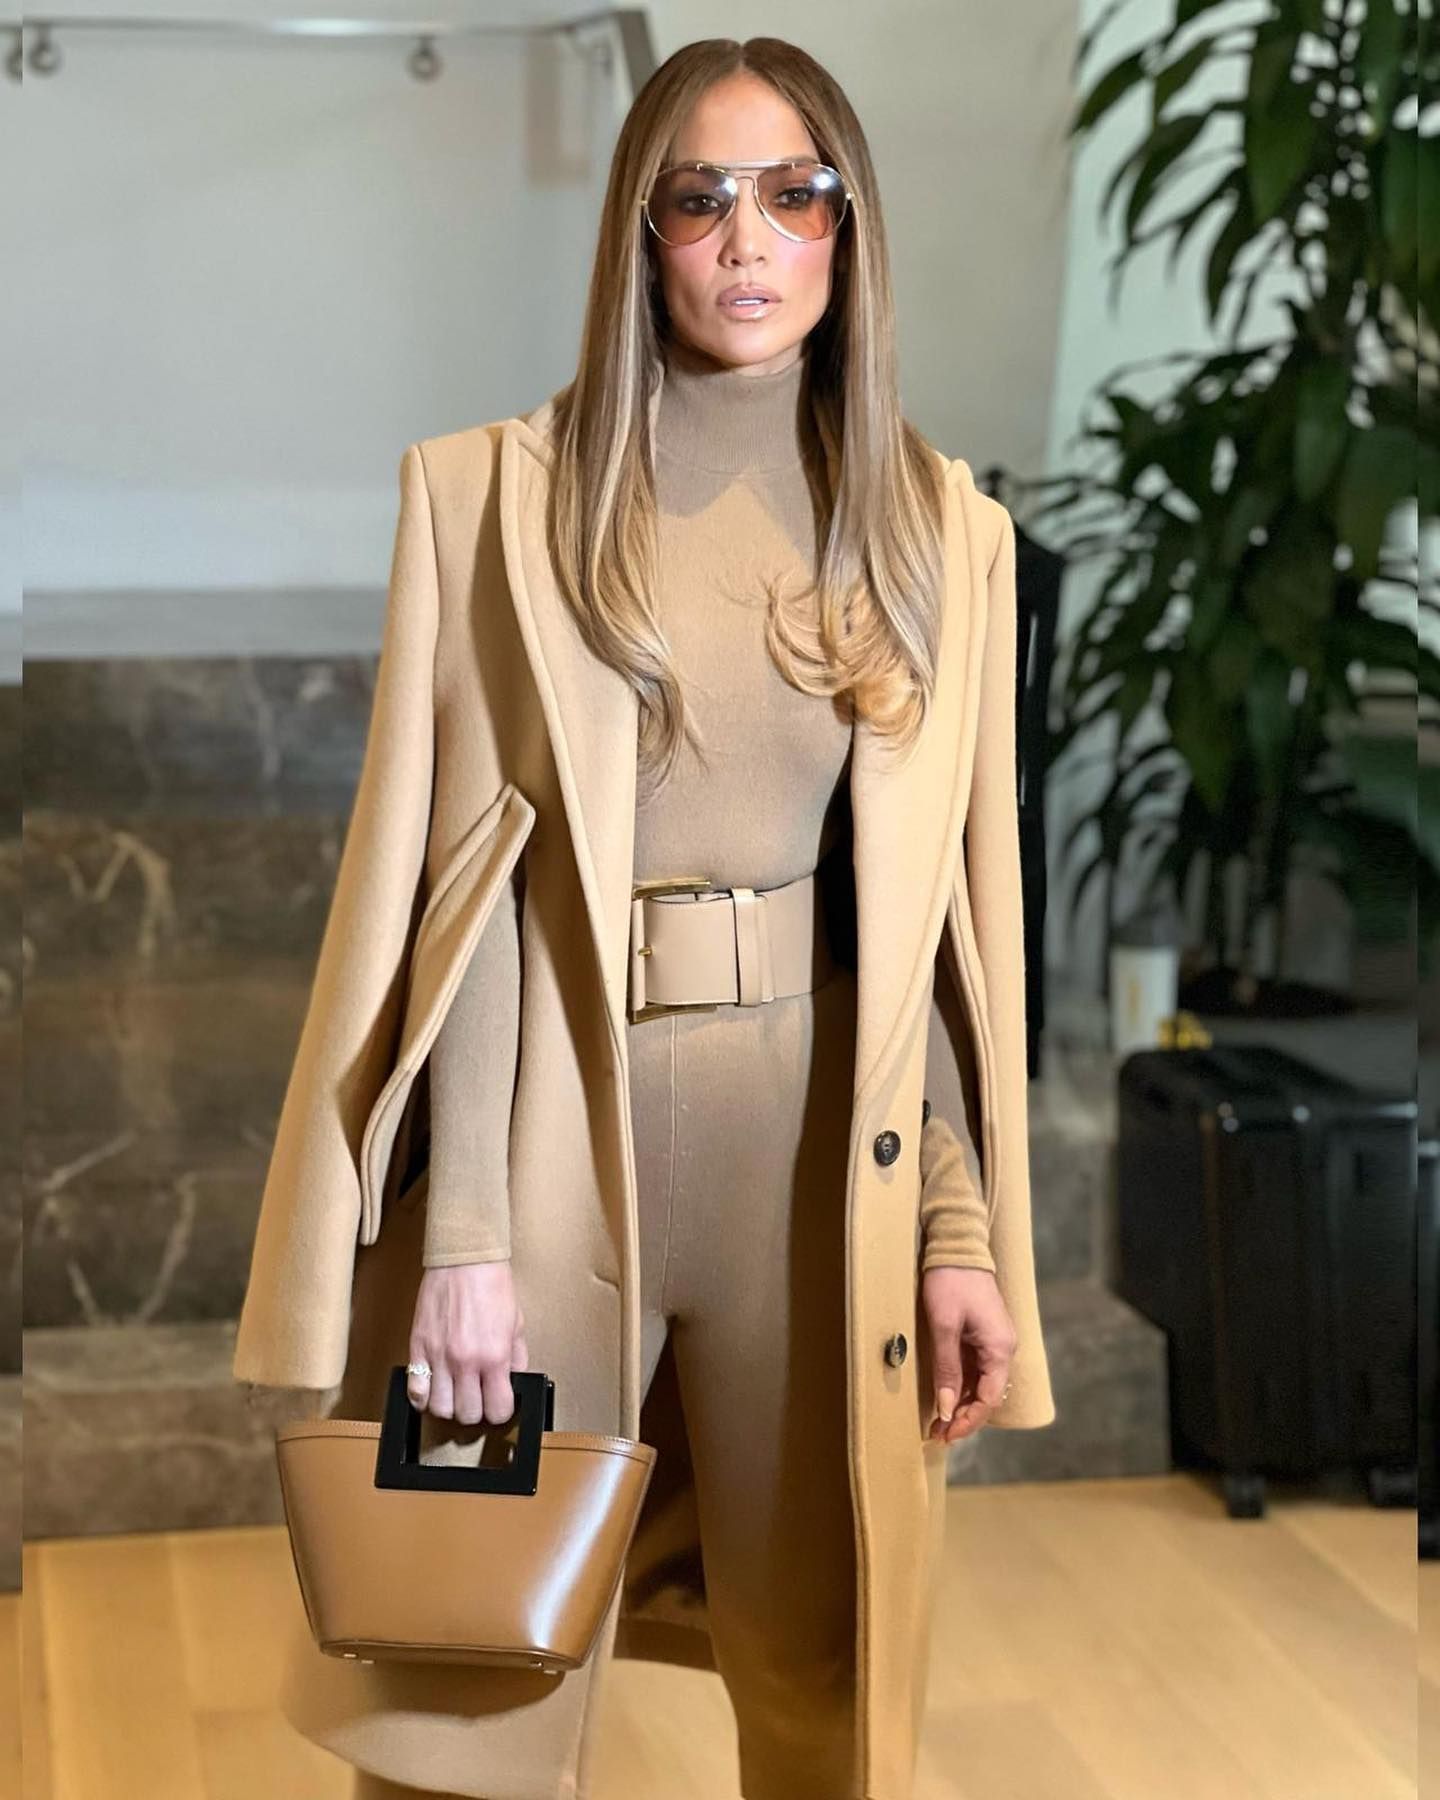 J.Lo's Monochrome GMA Michael Kors Look | Who What Wear